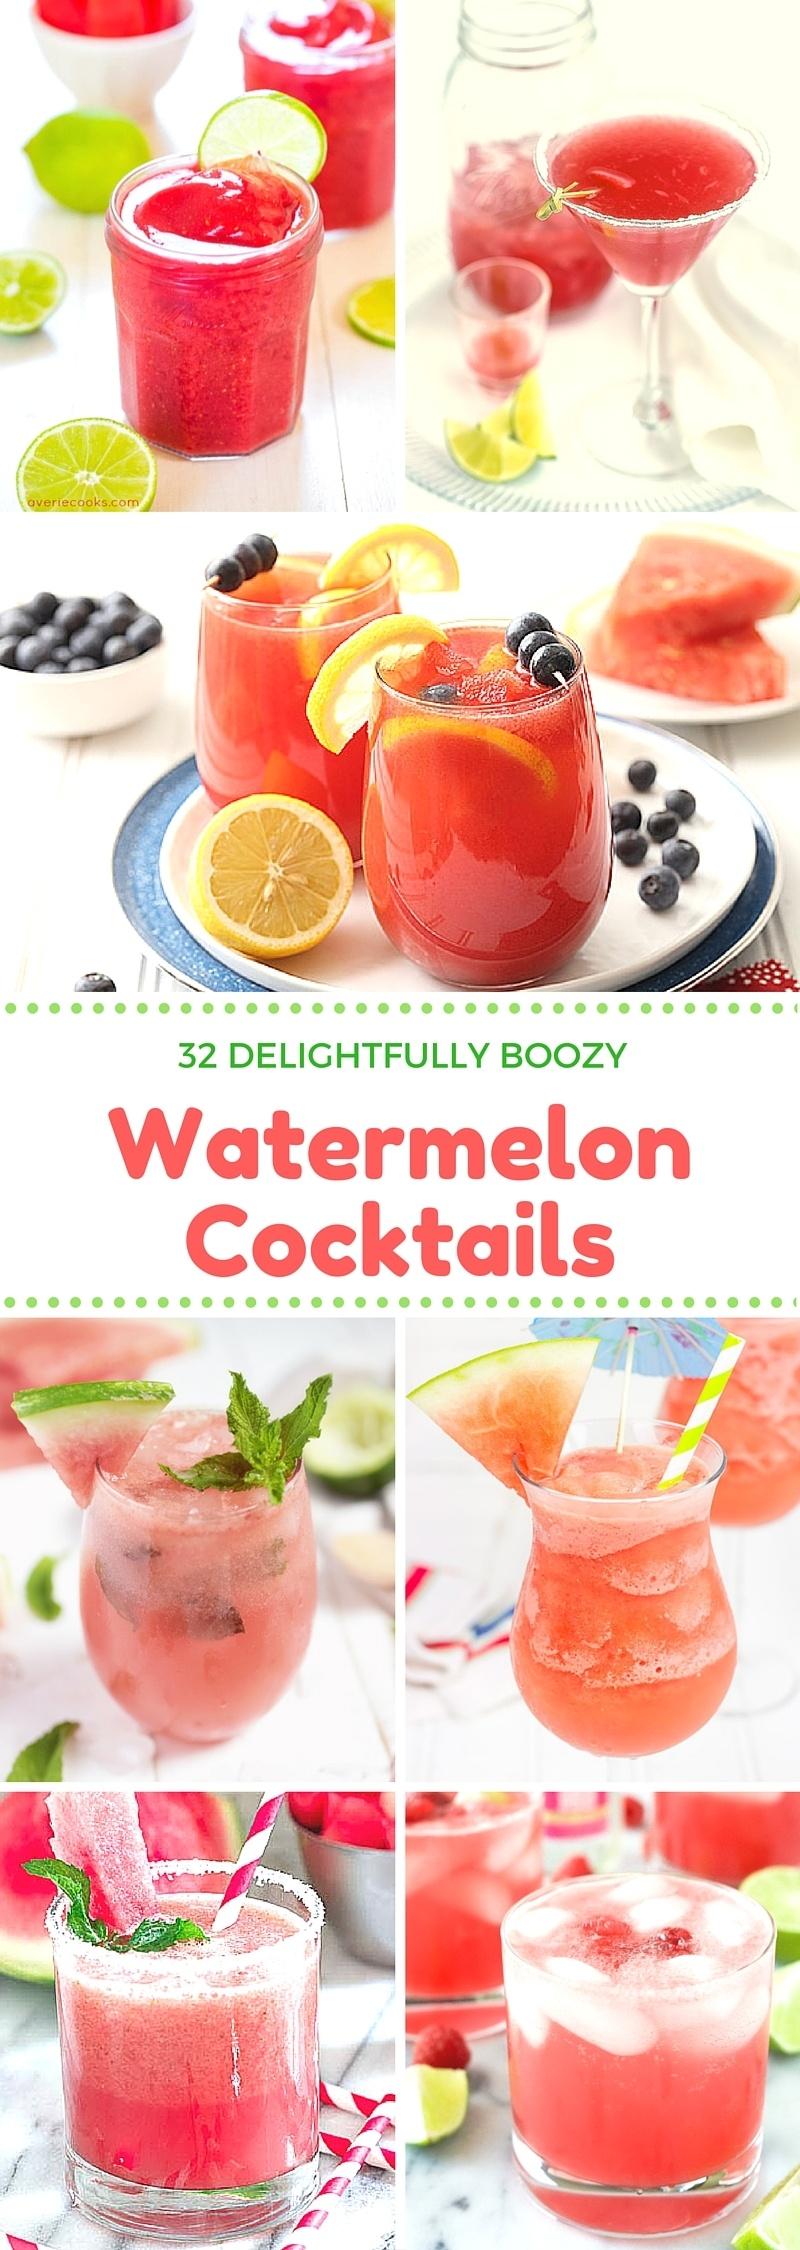 watermelon cocktails on pinterest